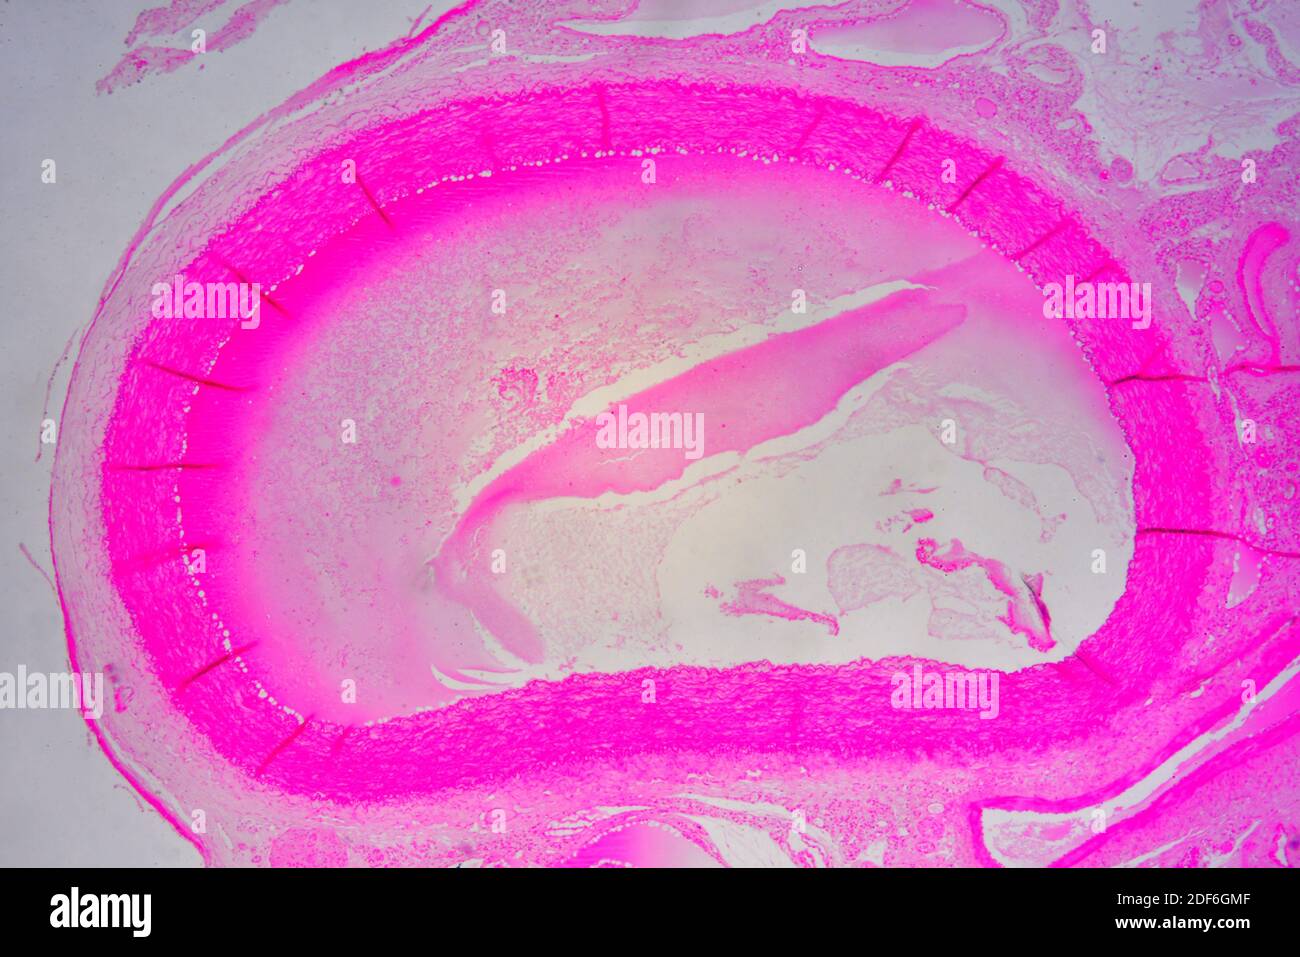 Arteriole (blood vessel). Optical microscope X40. Stock Photo